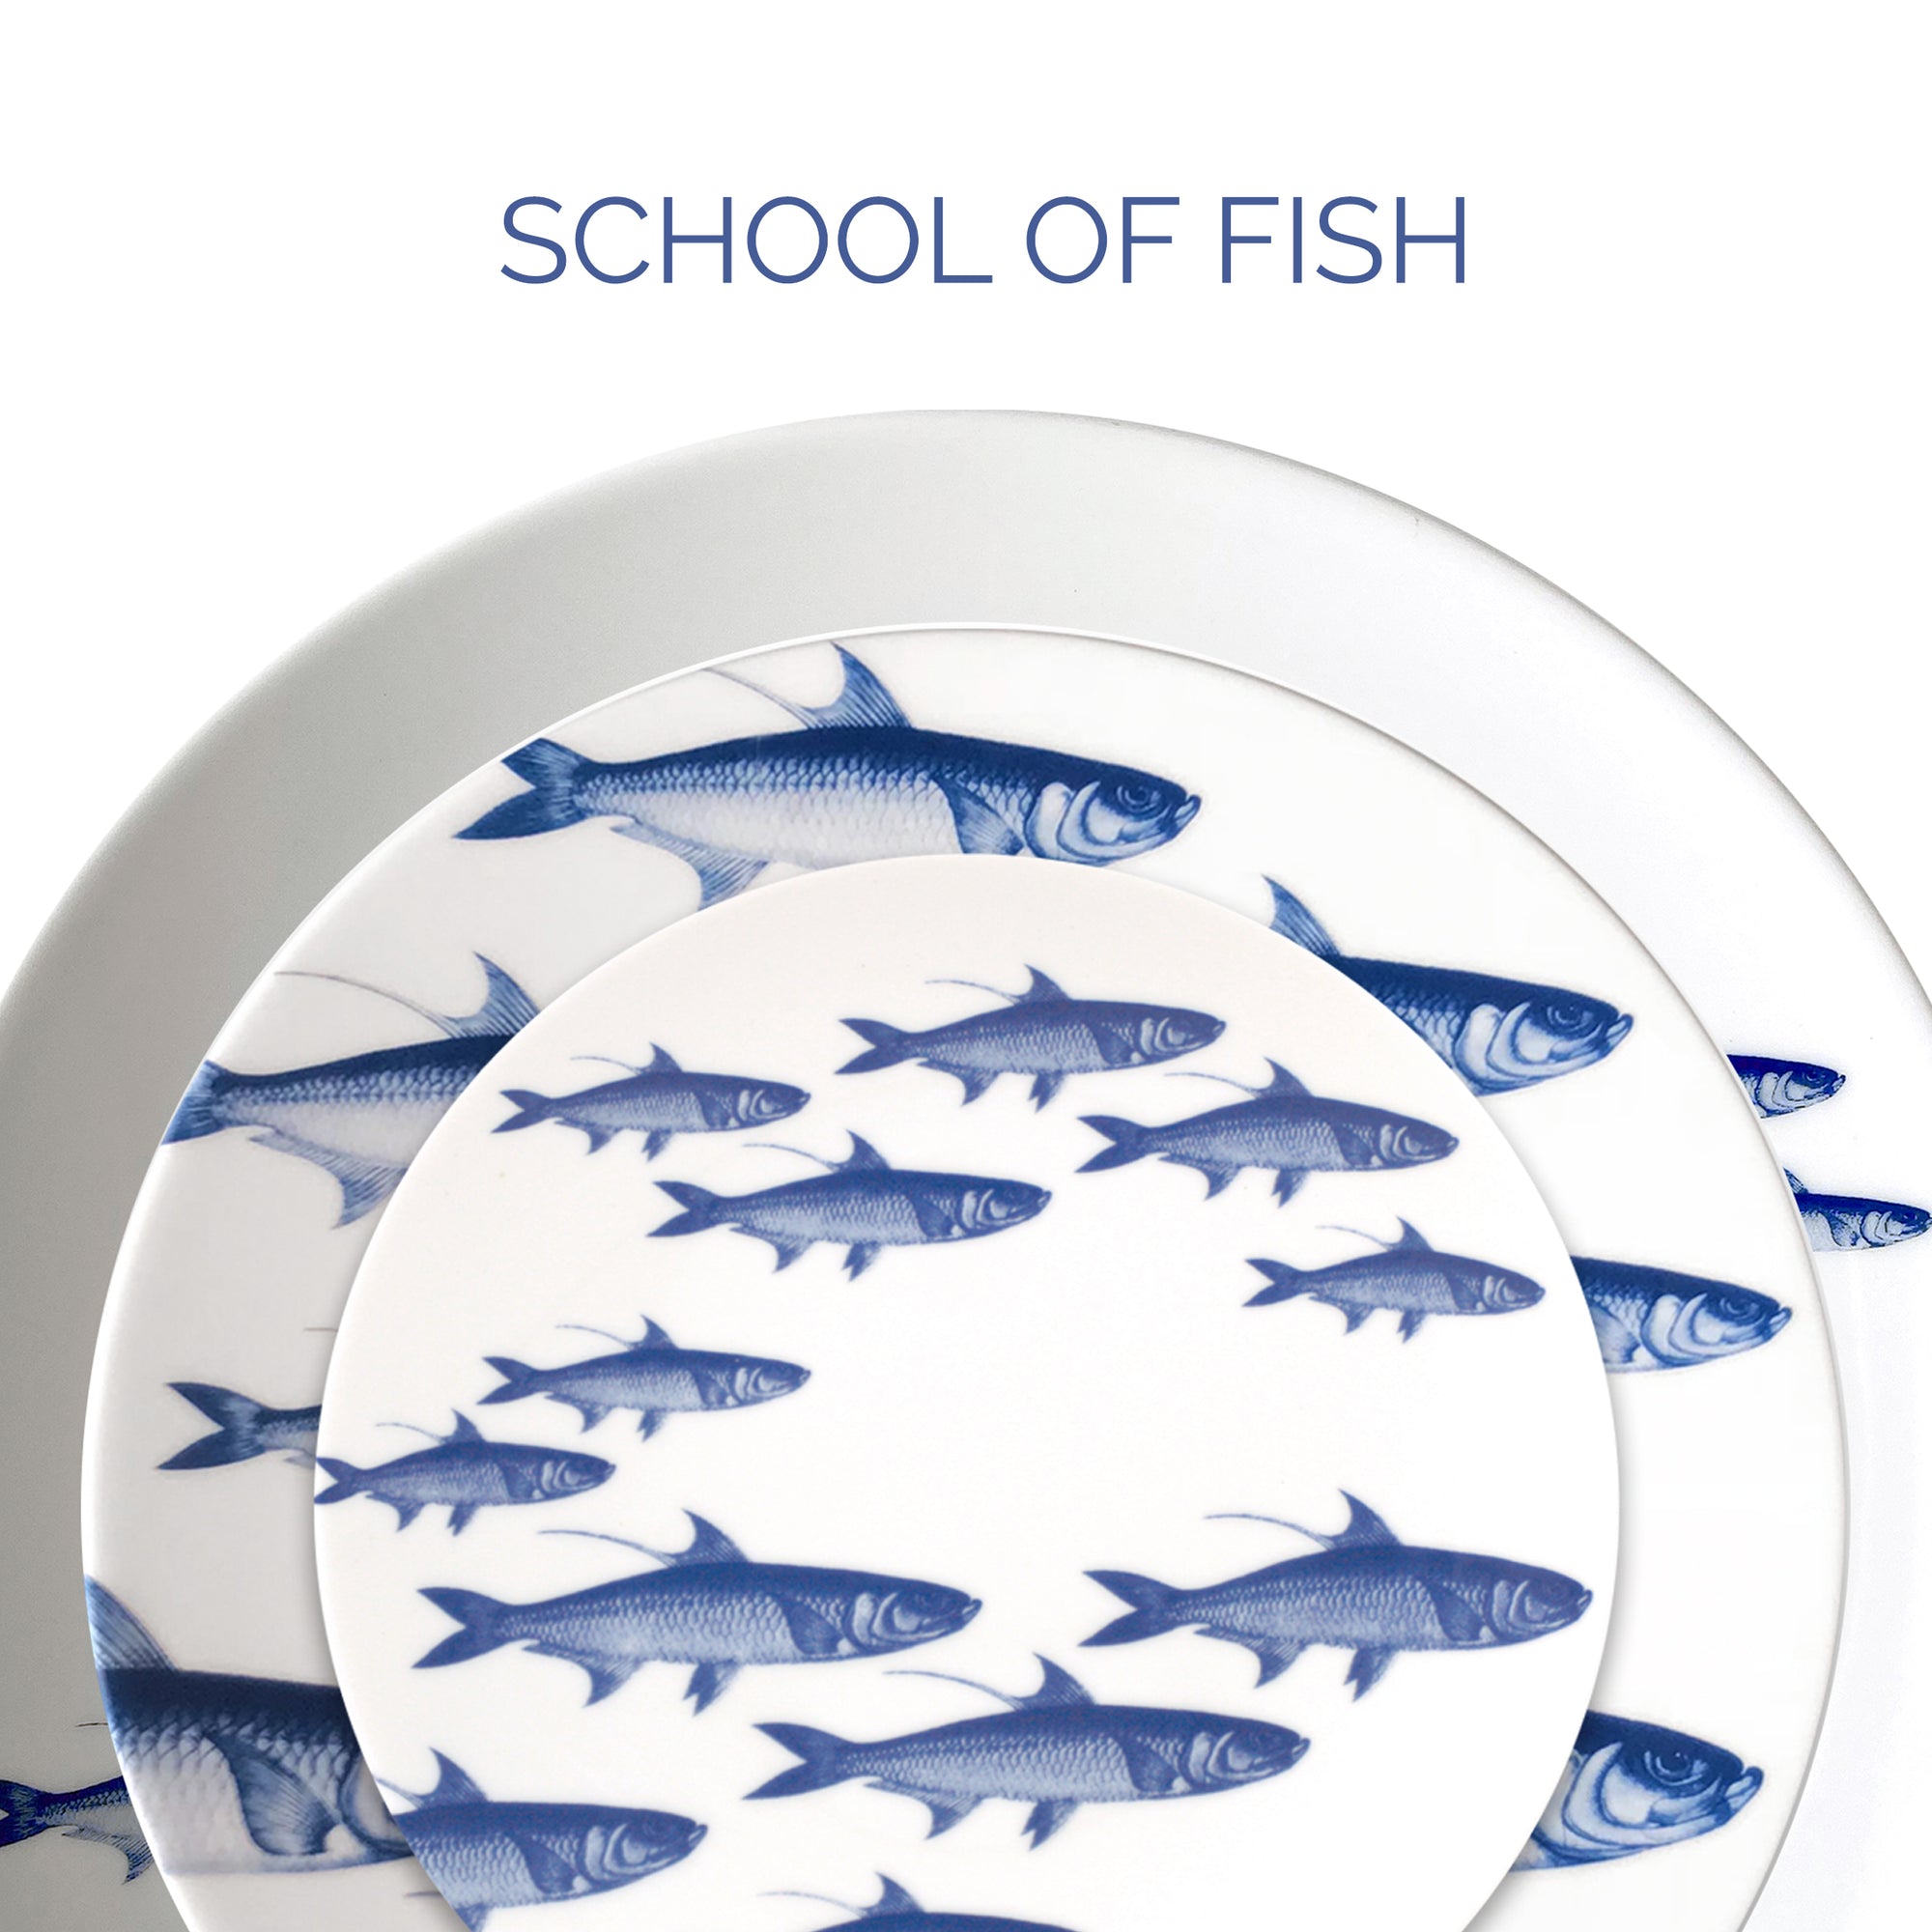 School of fish dinnerware.